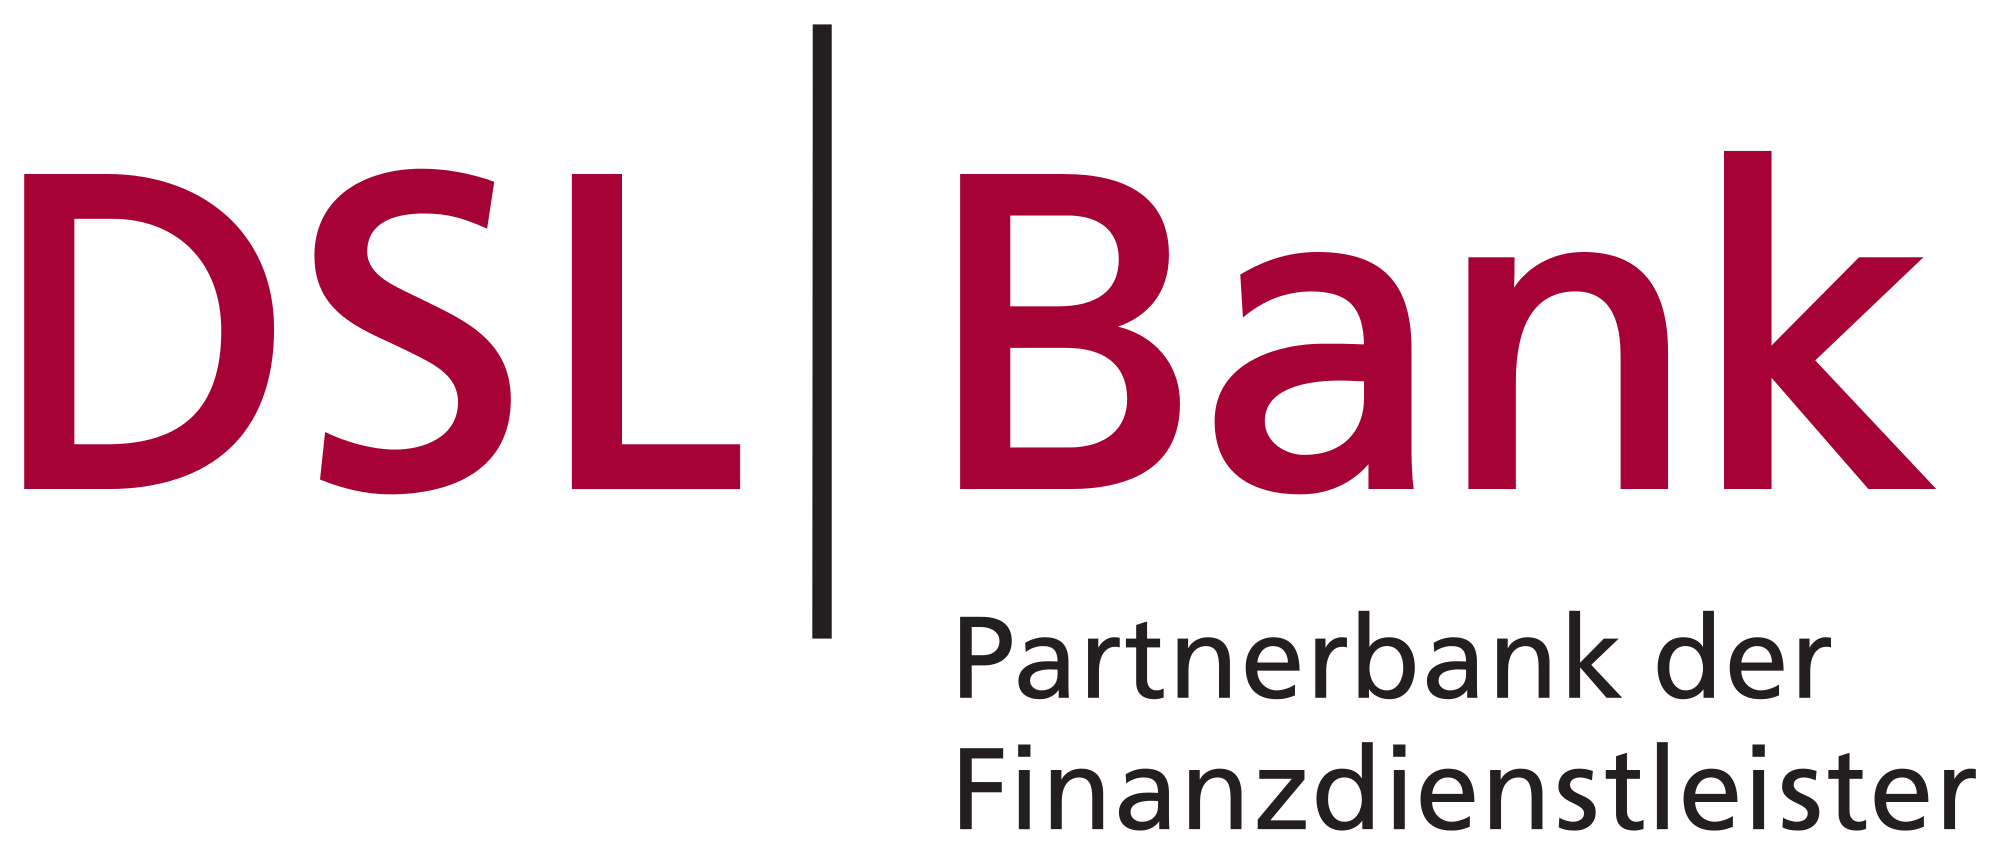 DSL Logo - File:DSL Bank logo.svg - Wikimedia Commons